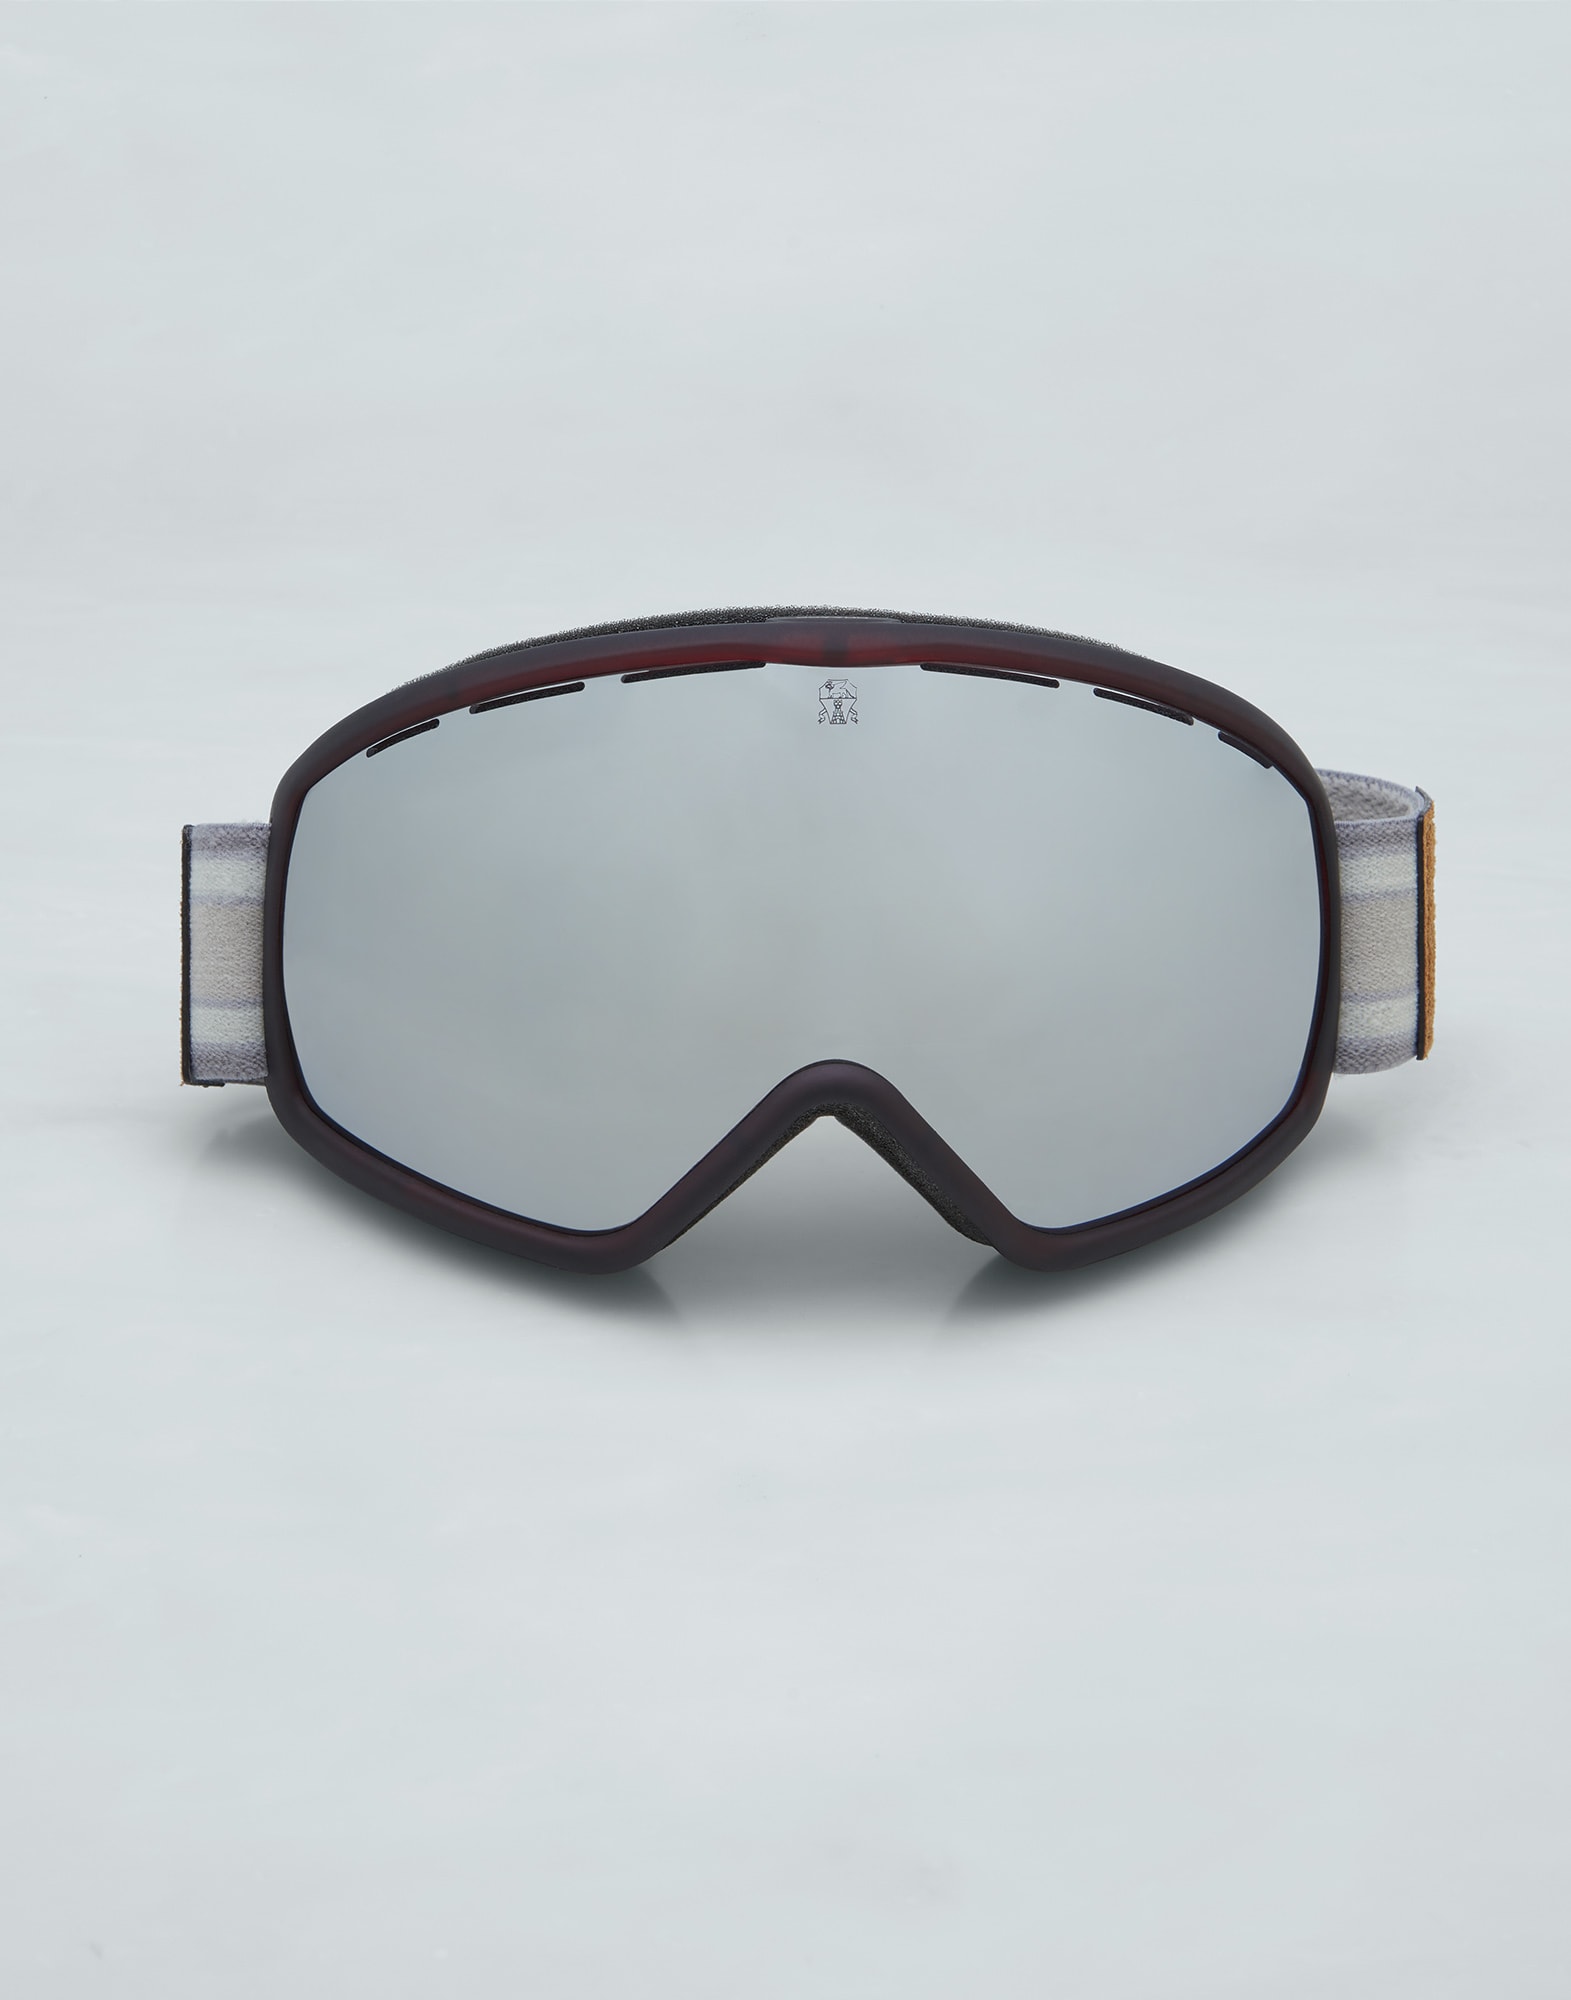 Skibrille Aspen Granatrot Brillen - Brunello Cucinelli